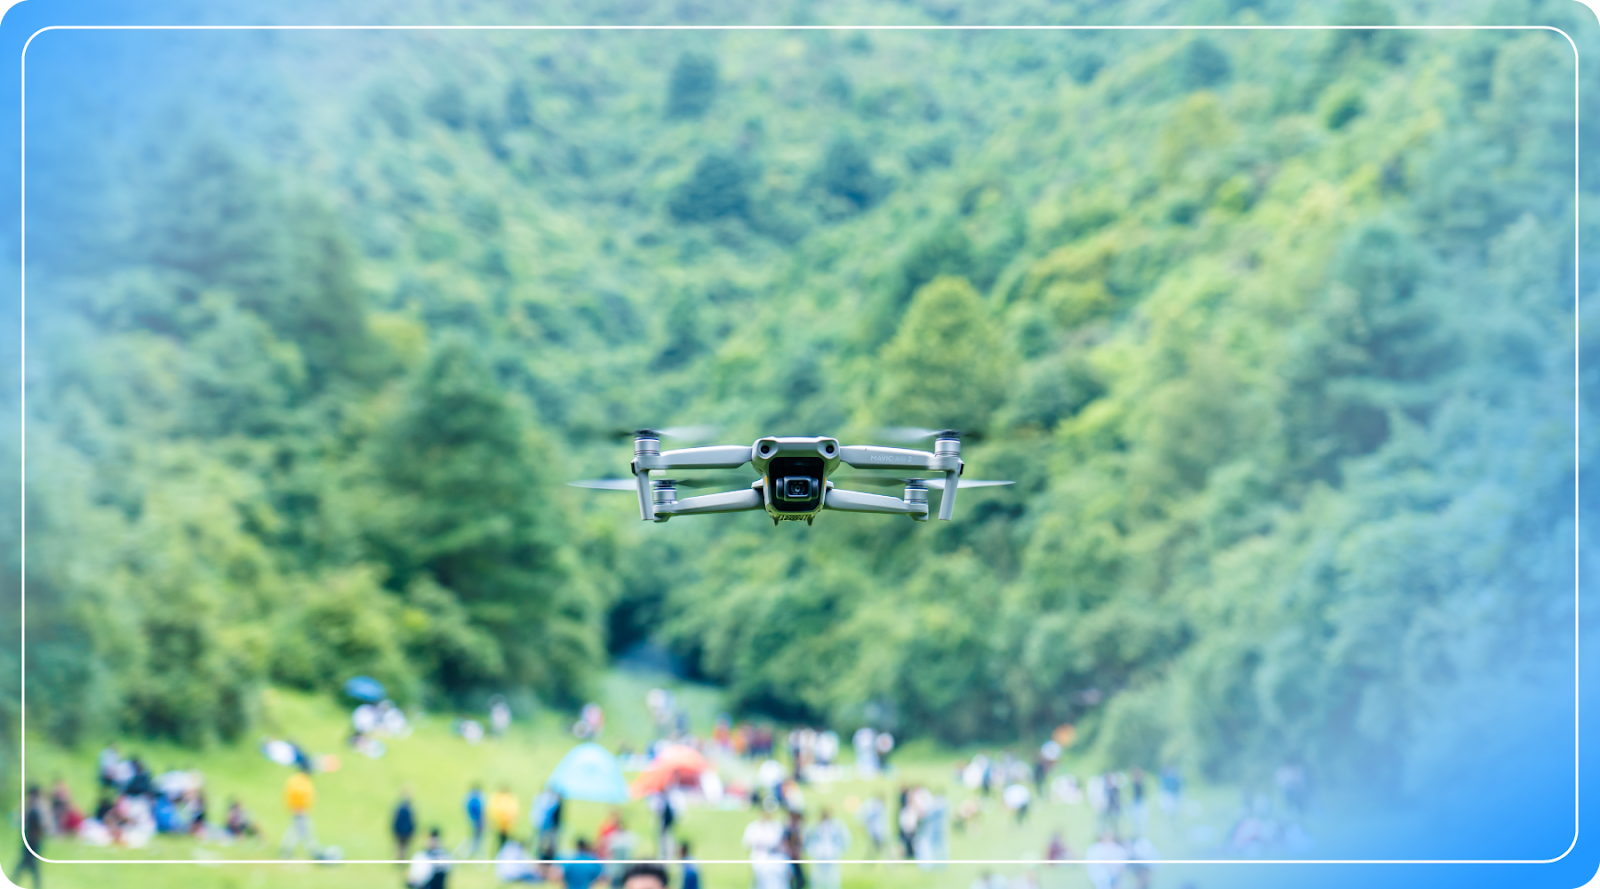 A drone flies above an open-air crowd.